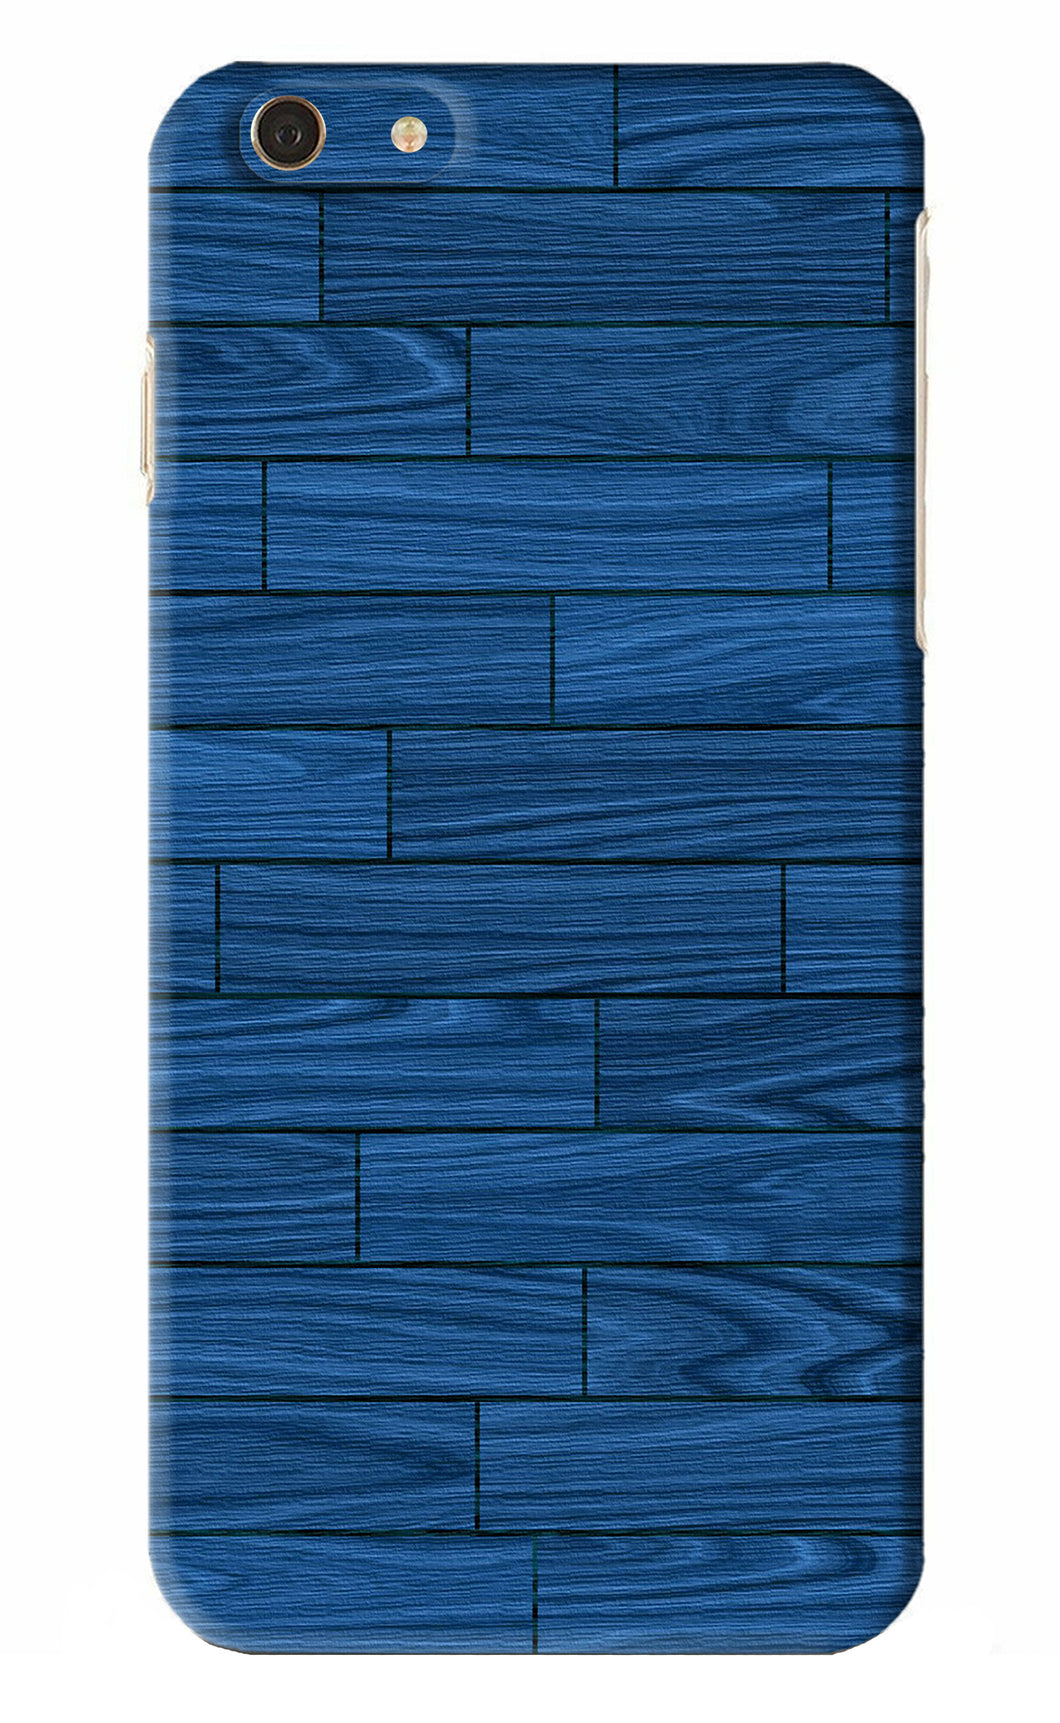 Blue Wooden Texture iPhone 6 Plus Back Skin Wrap